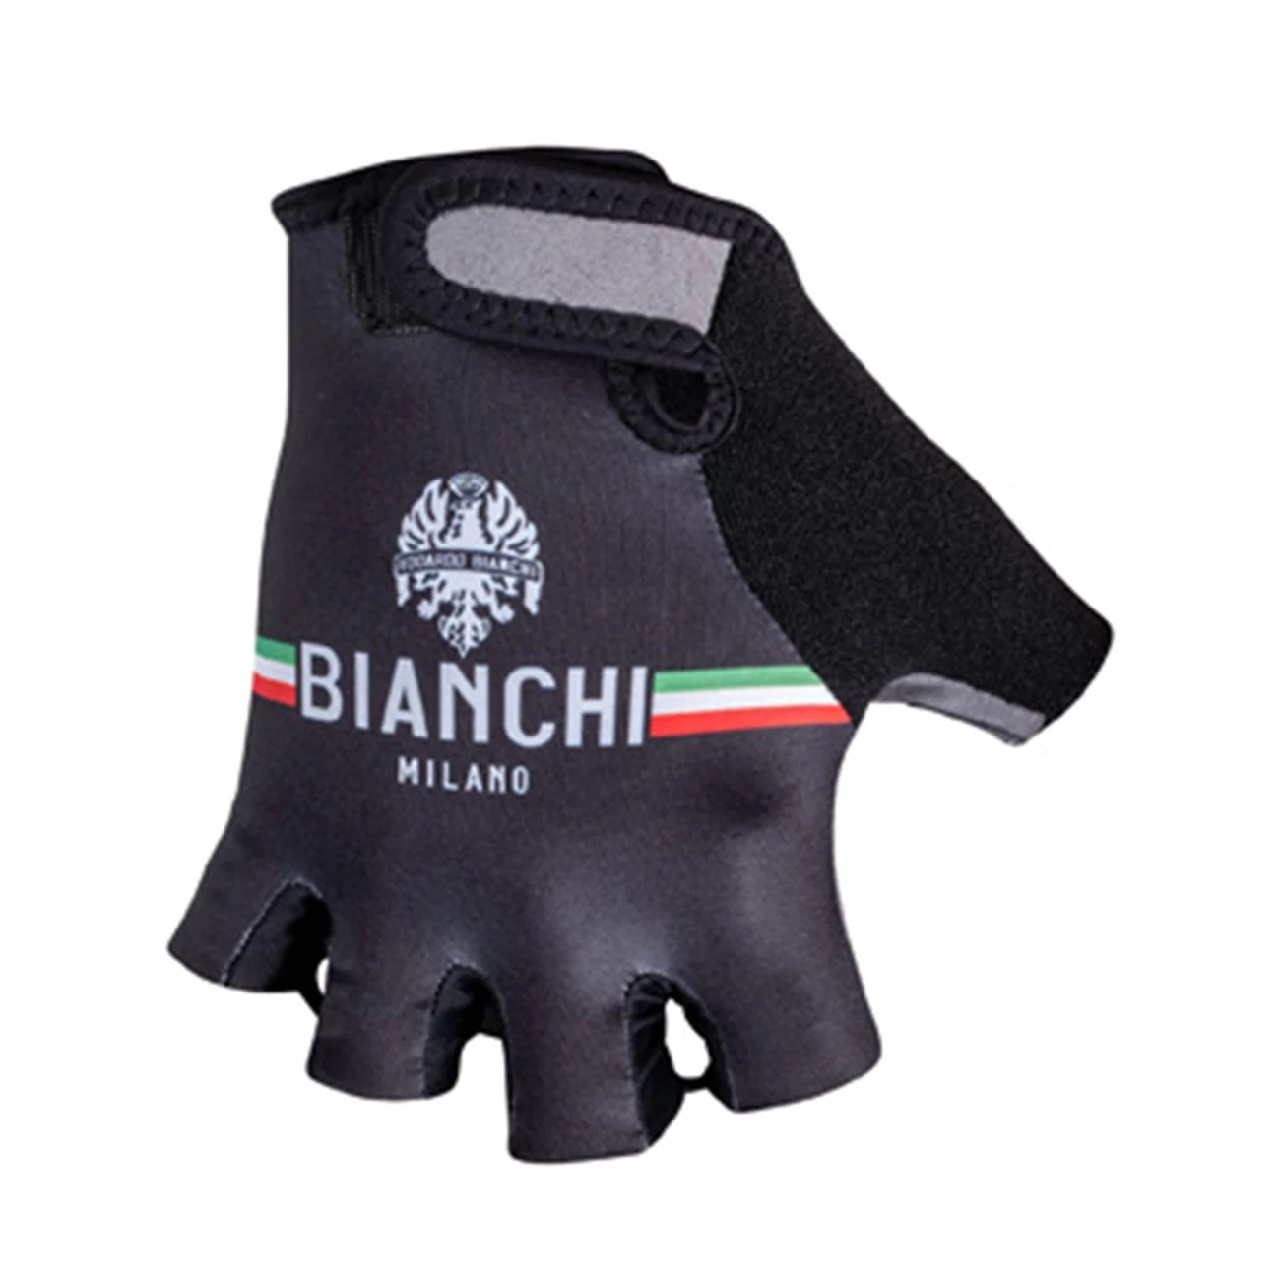 Nalini 2021 Bianchi Milano ANAPO Cycling Gloves - BLACK